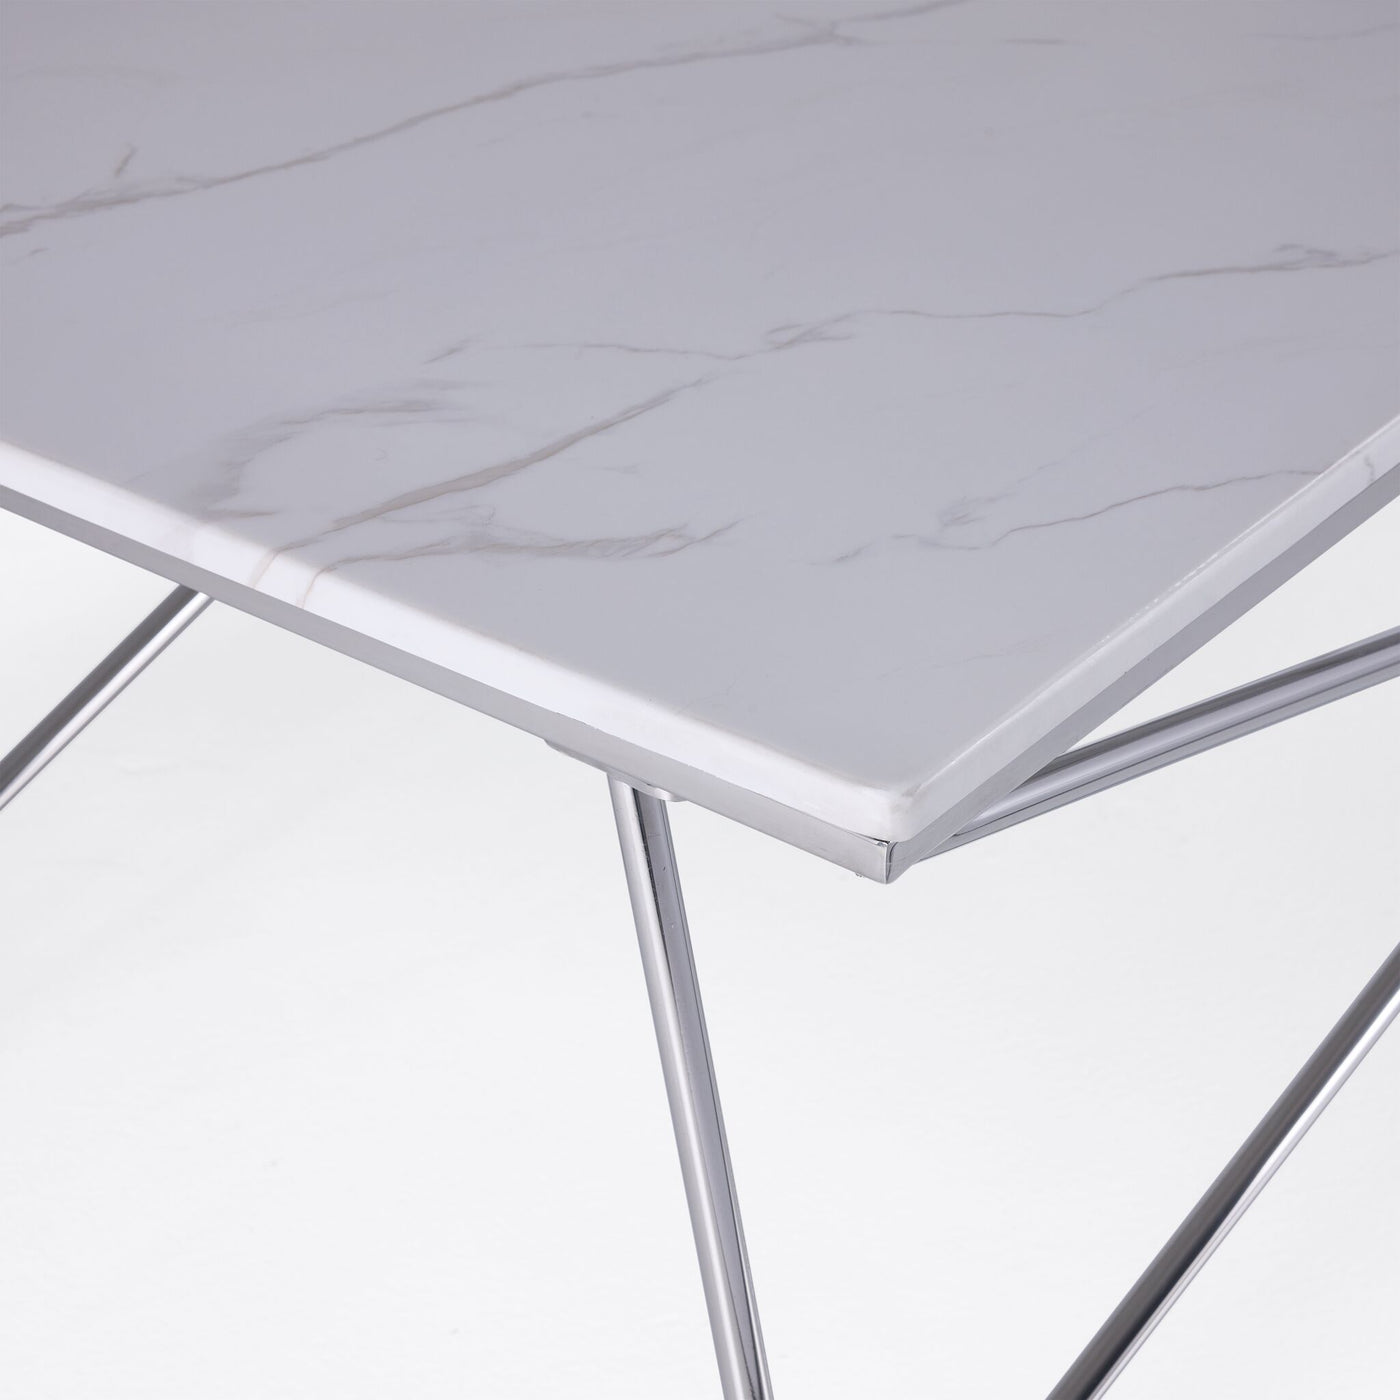 Farah End Table - White and Chrome